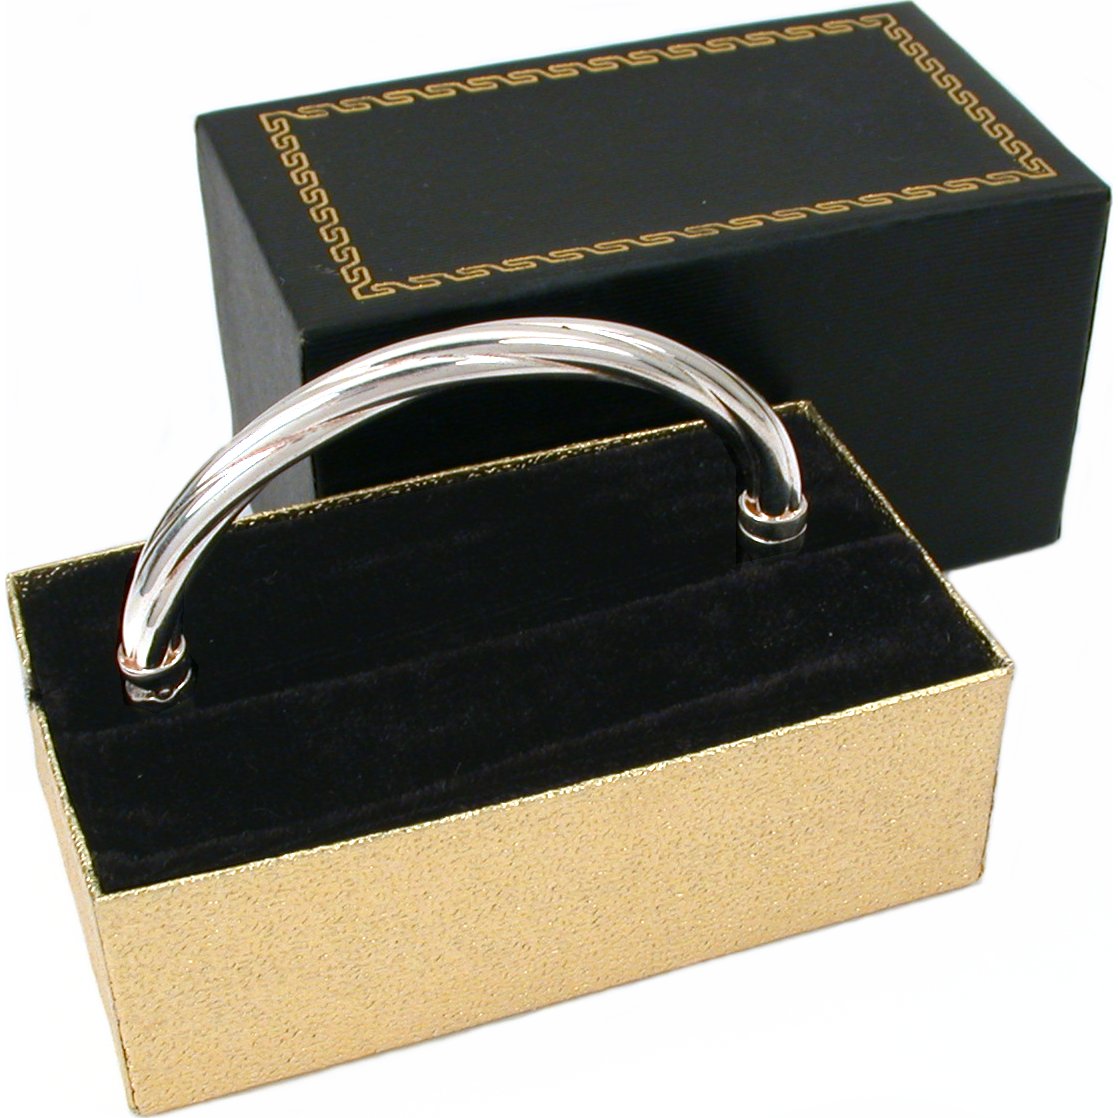 3 Bangle Bracelet Boxes Black & Gold Gift Display Boxes